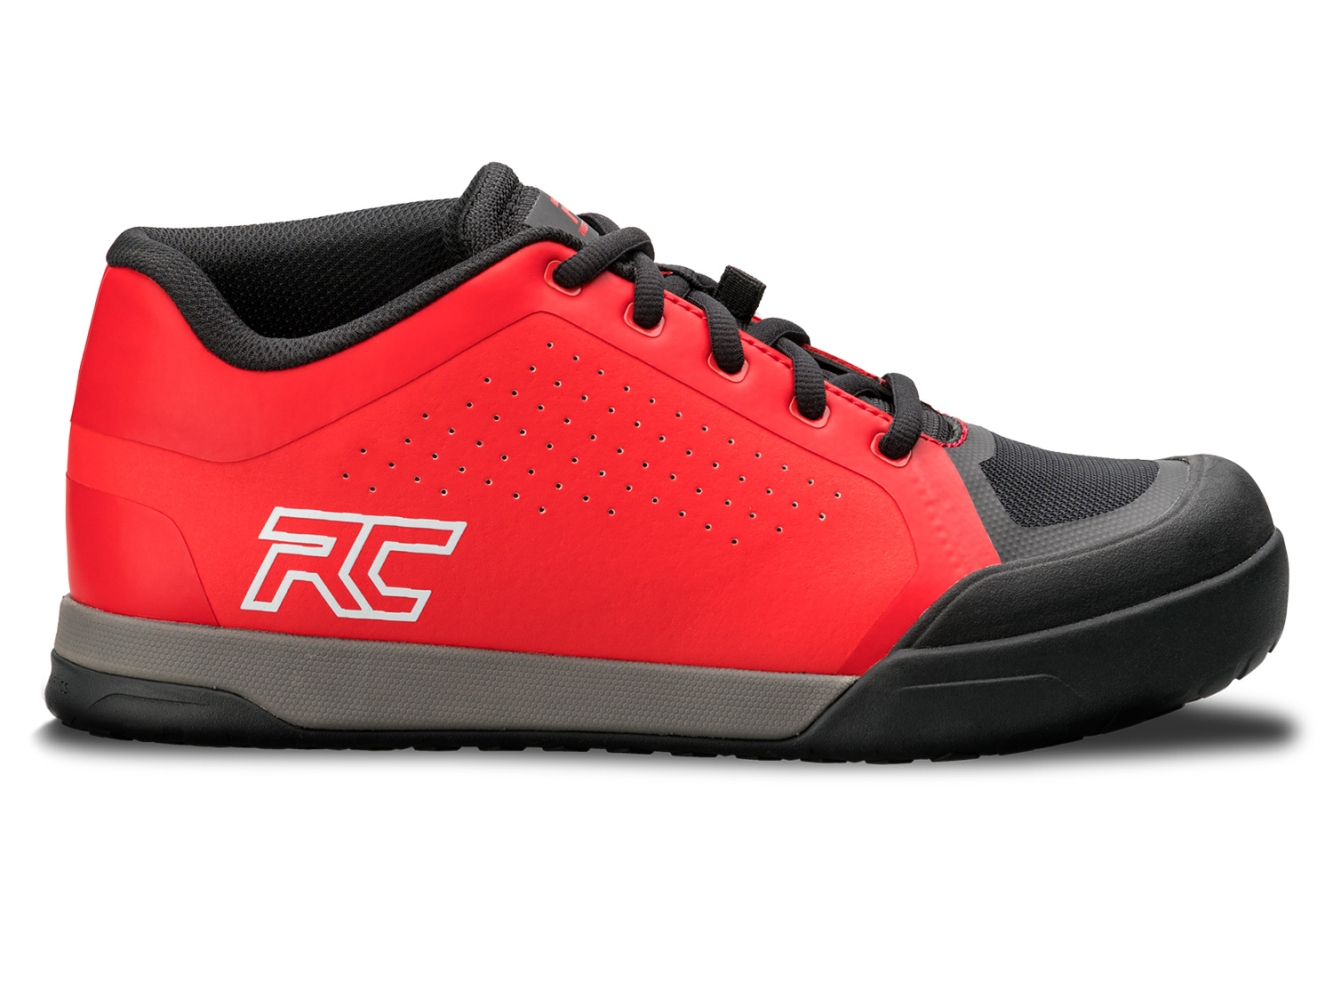 Ride Concepts Powerline Men's Shoe red/black